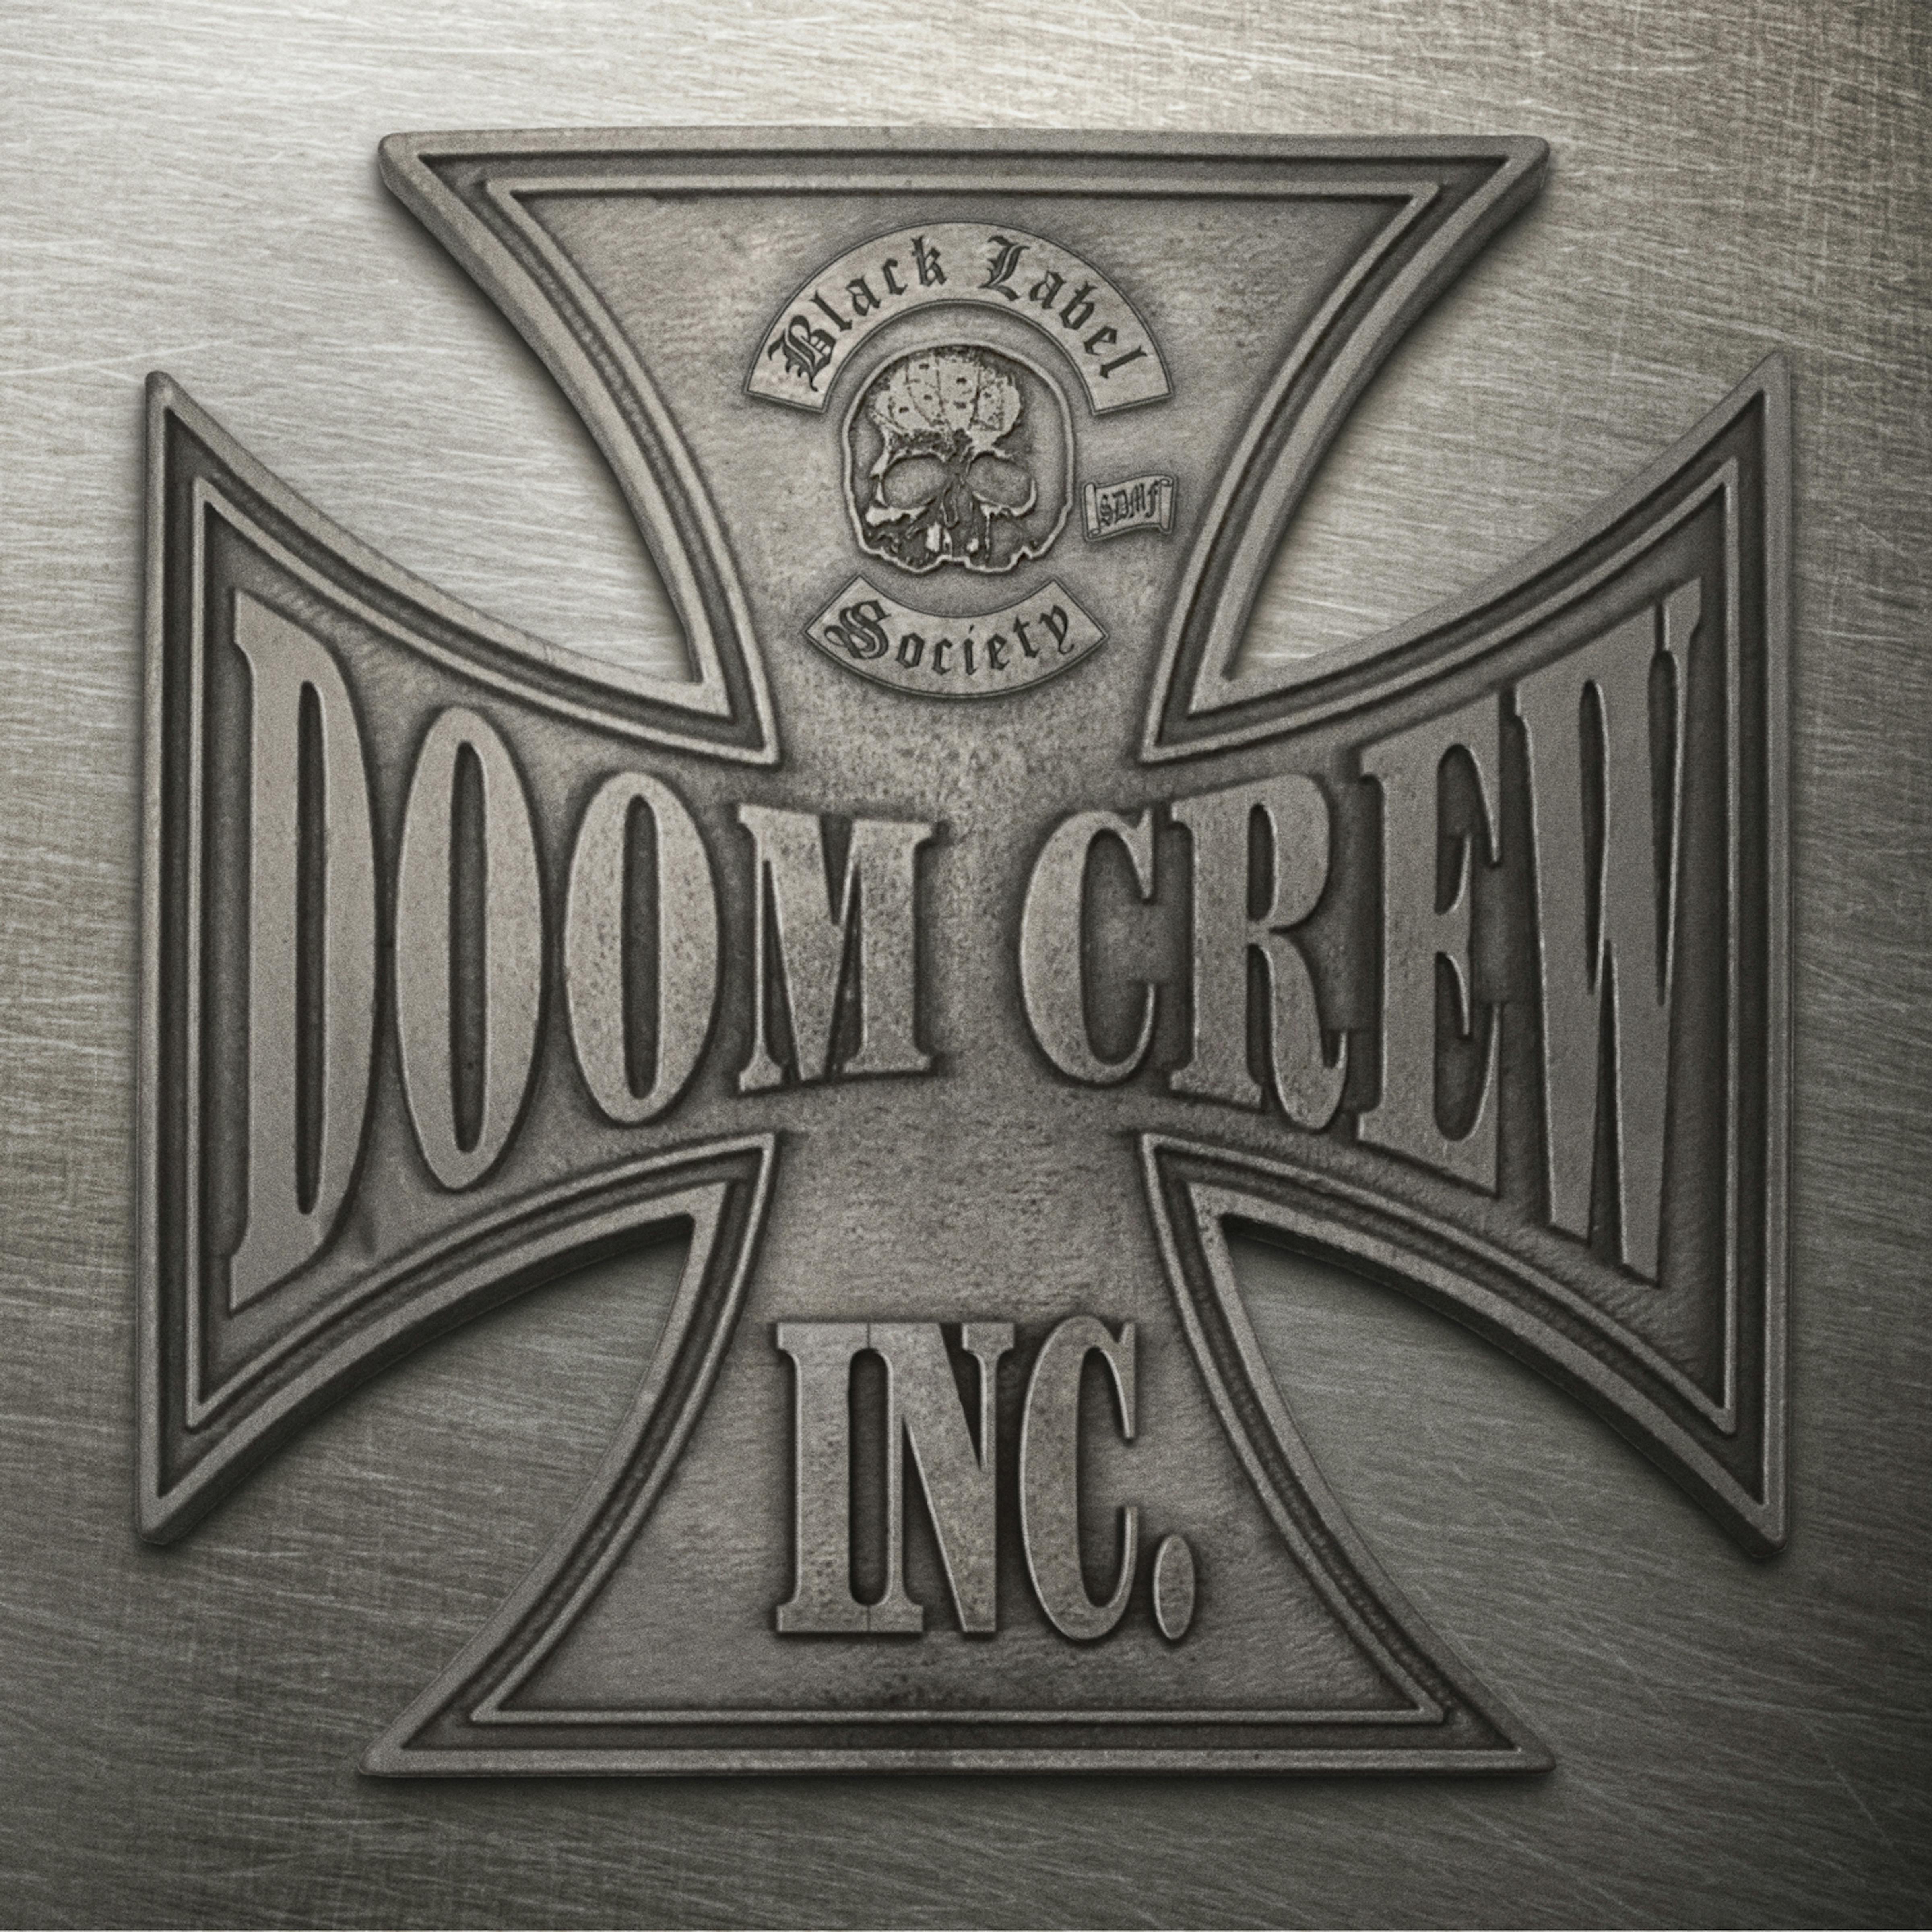 Black Label Society announce new album, Doom Crew Inc. — Kerrang!